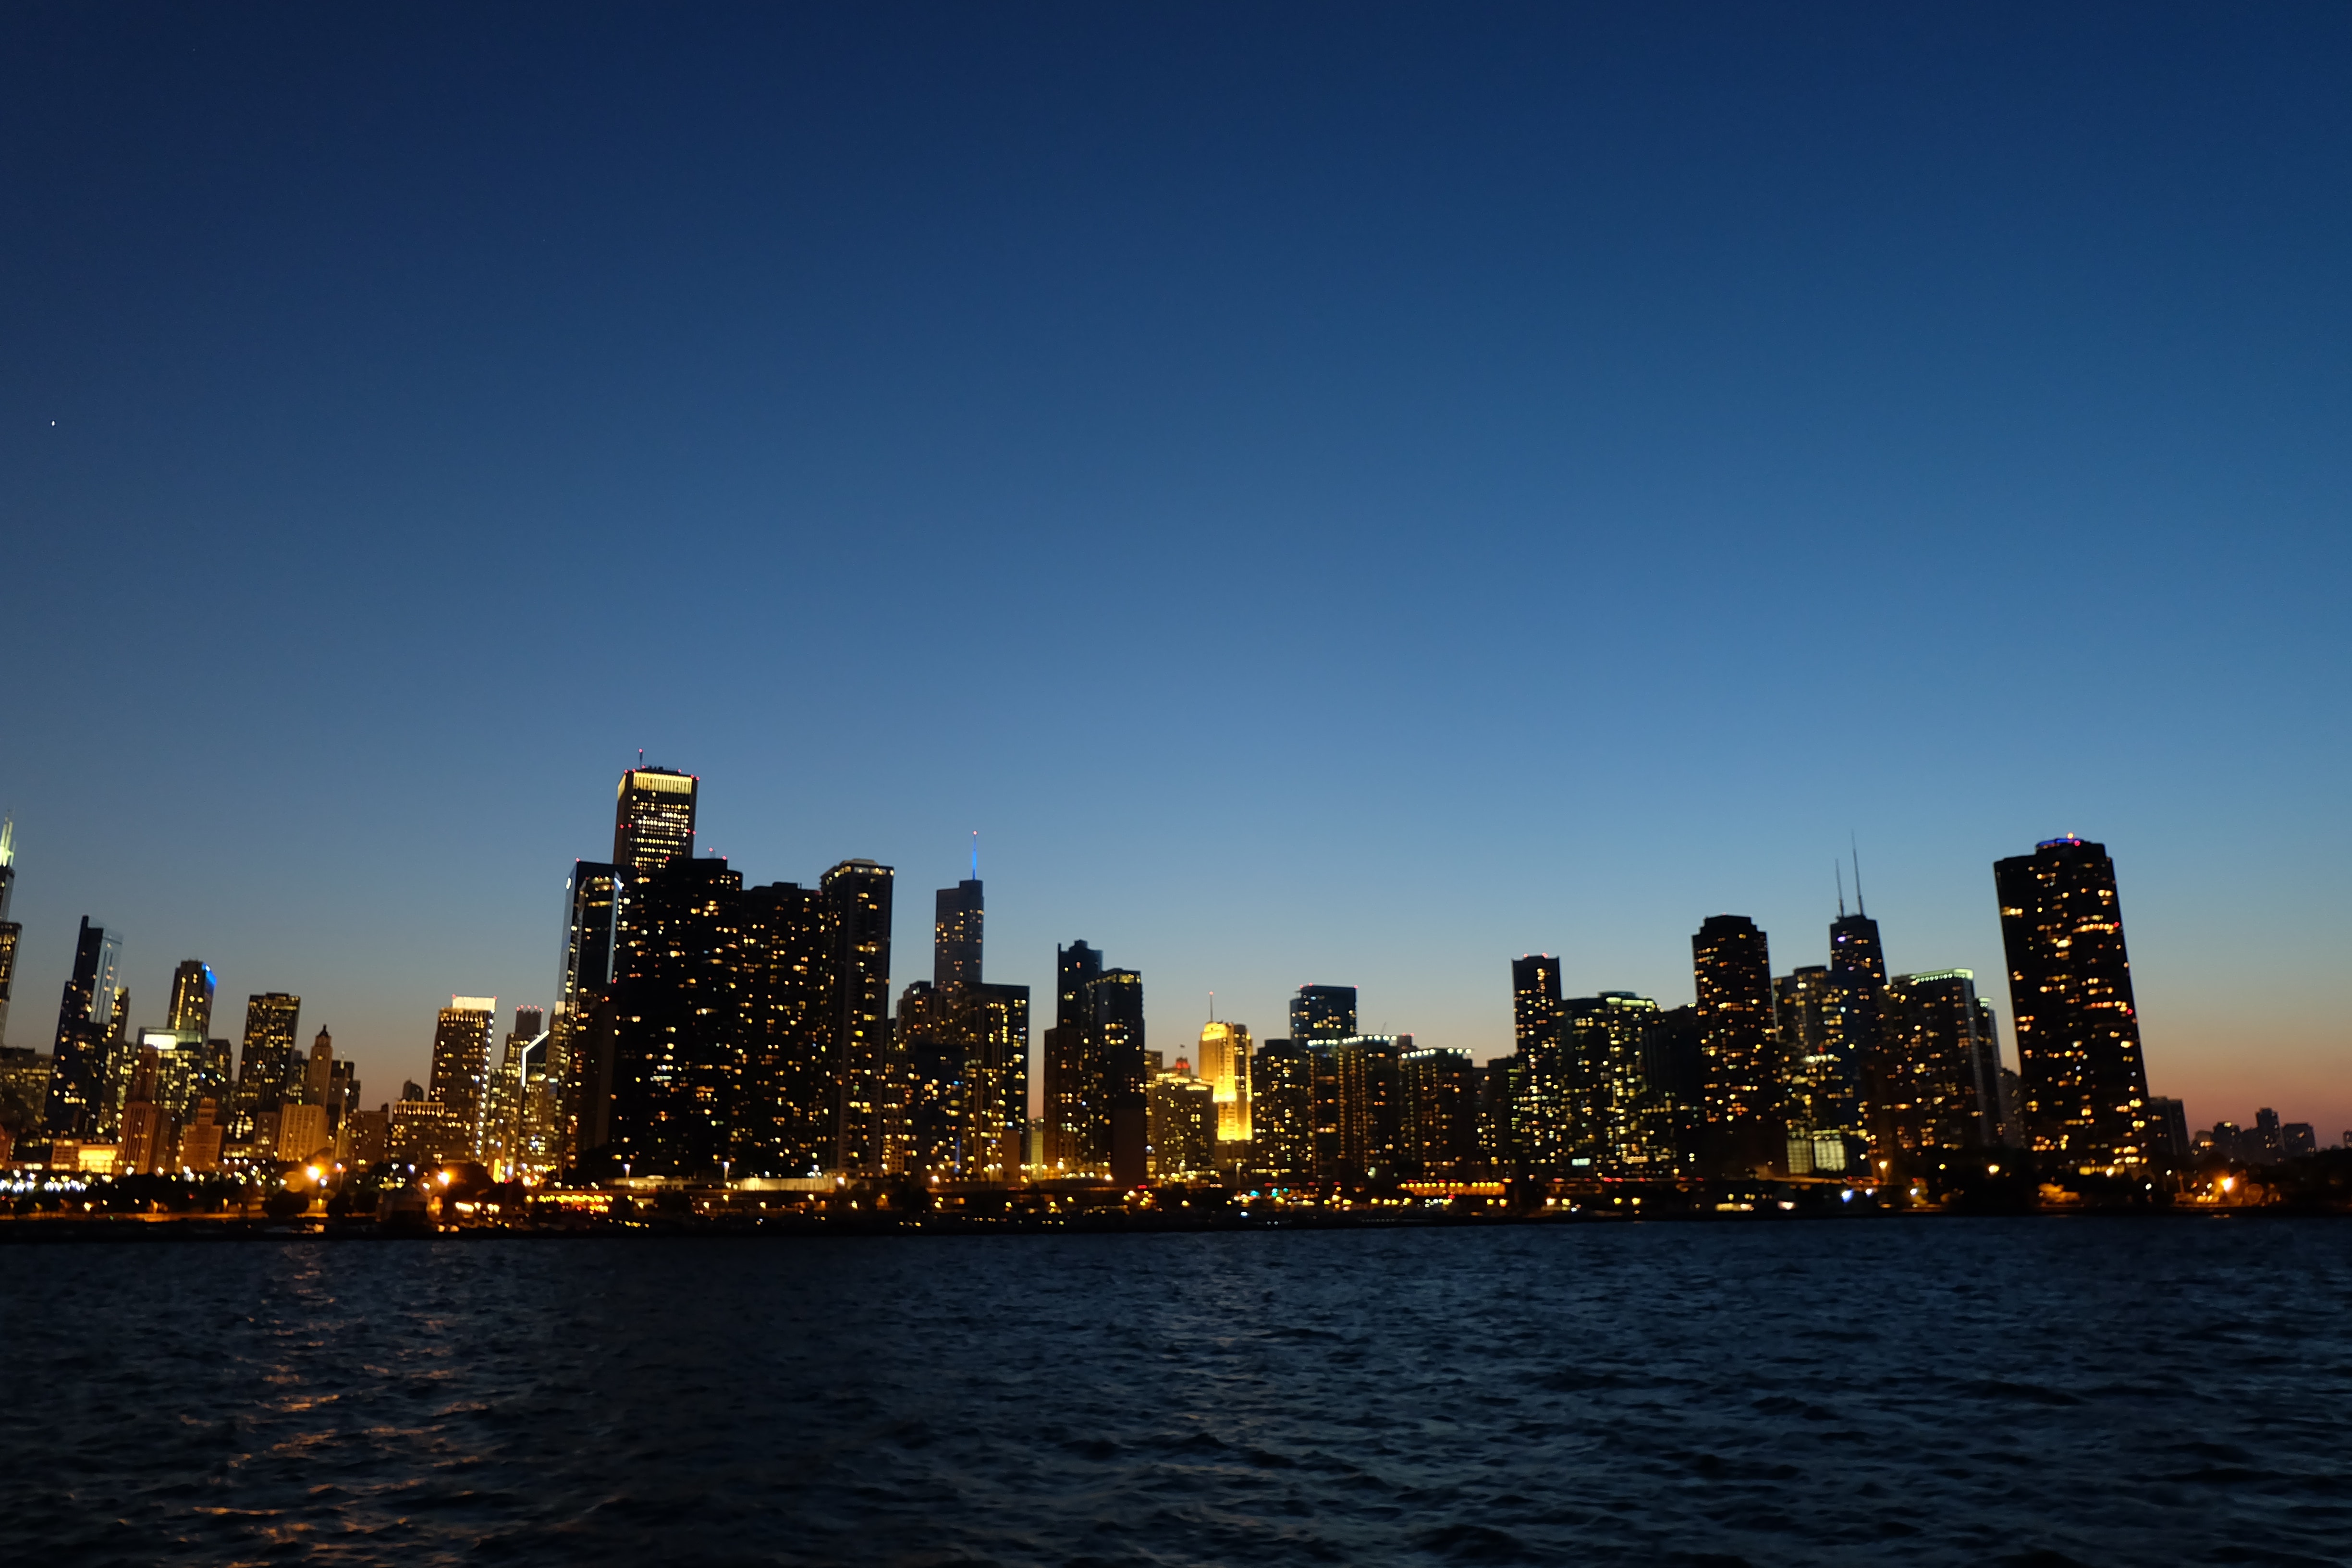 City skyline during nighttime photo